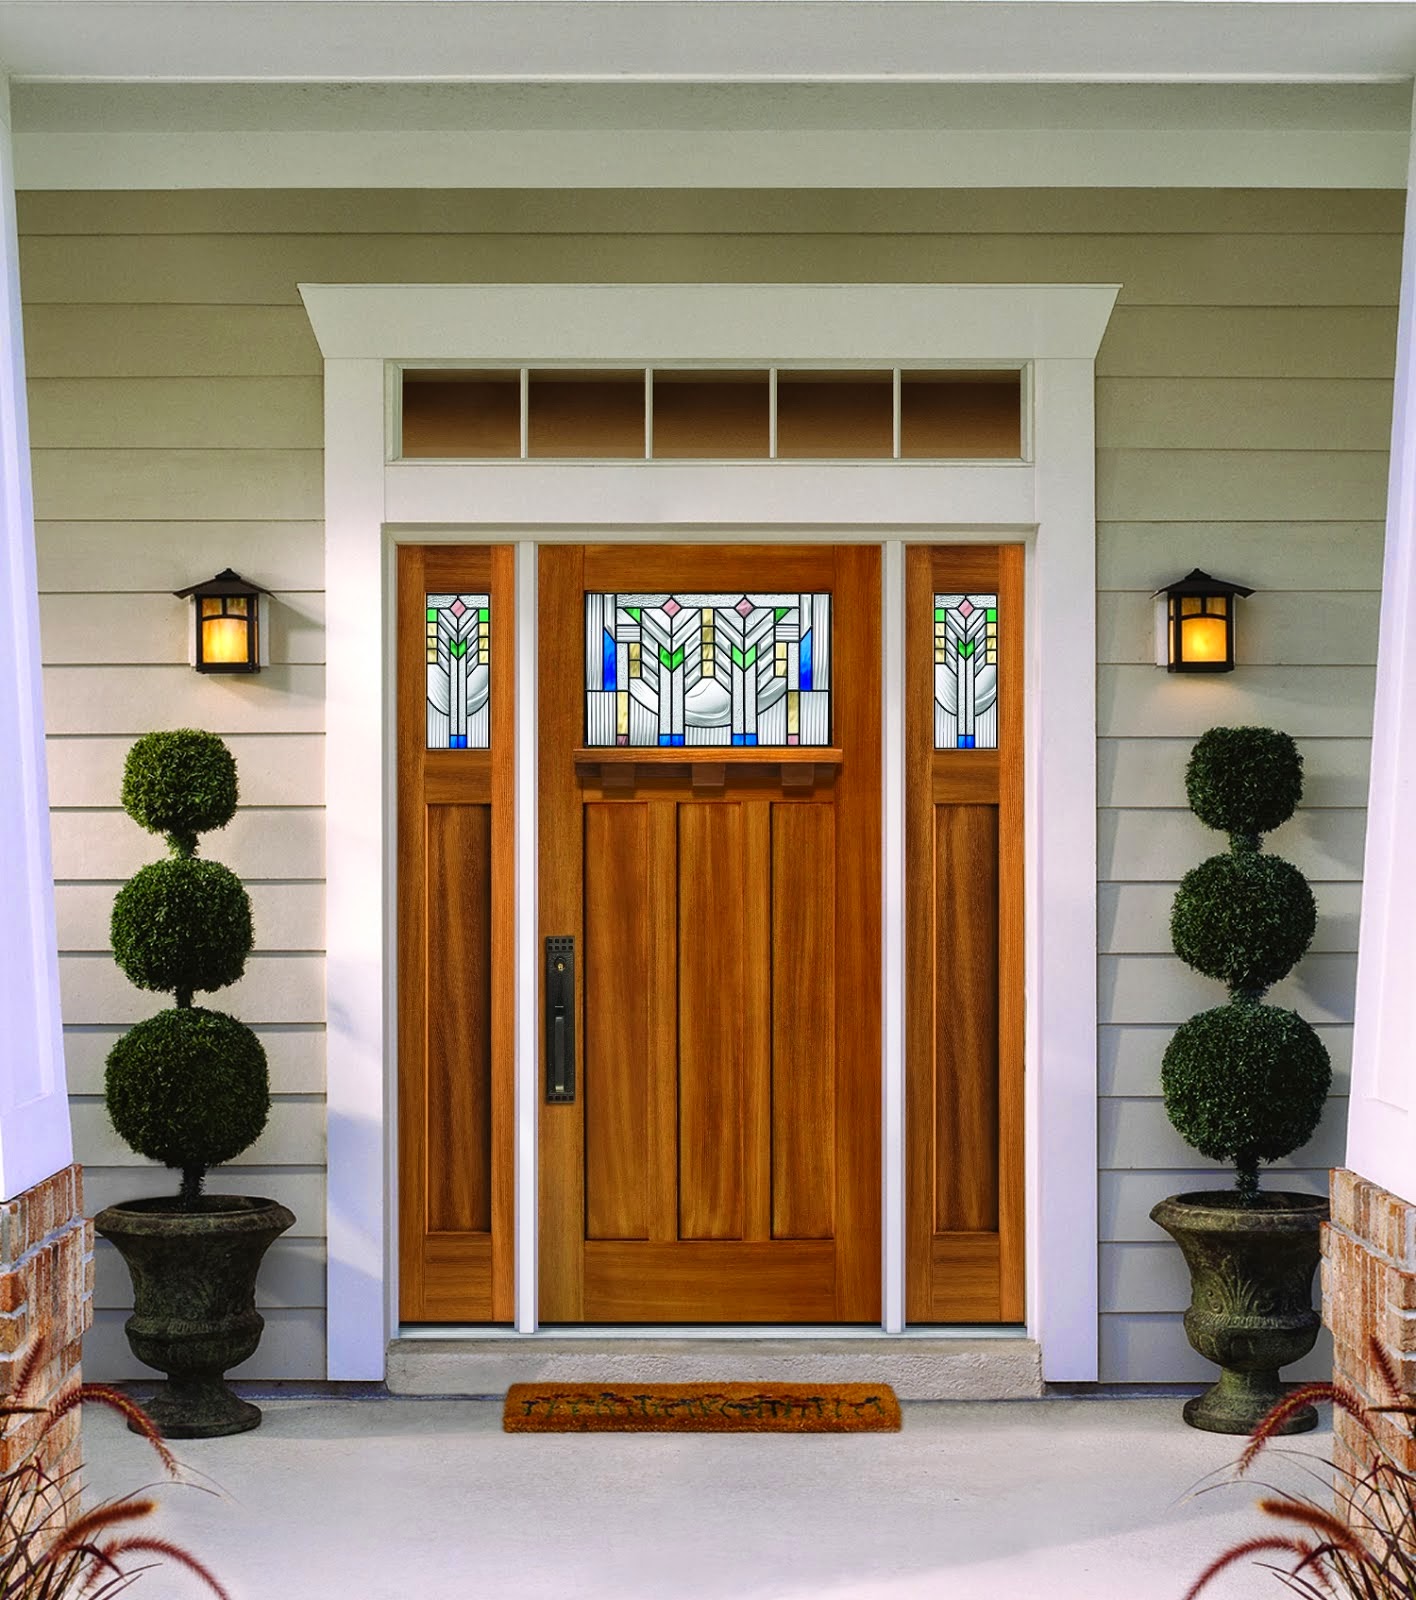  gambar pintu utama rumah minimalis 2020 yang unik gambar 